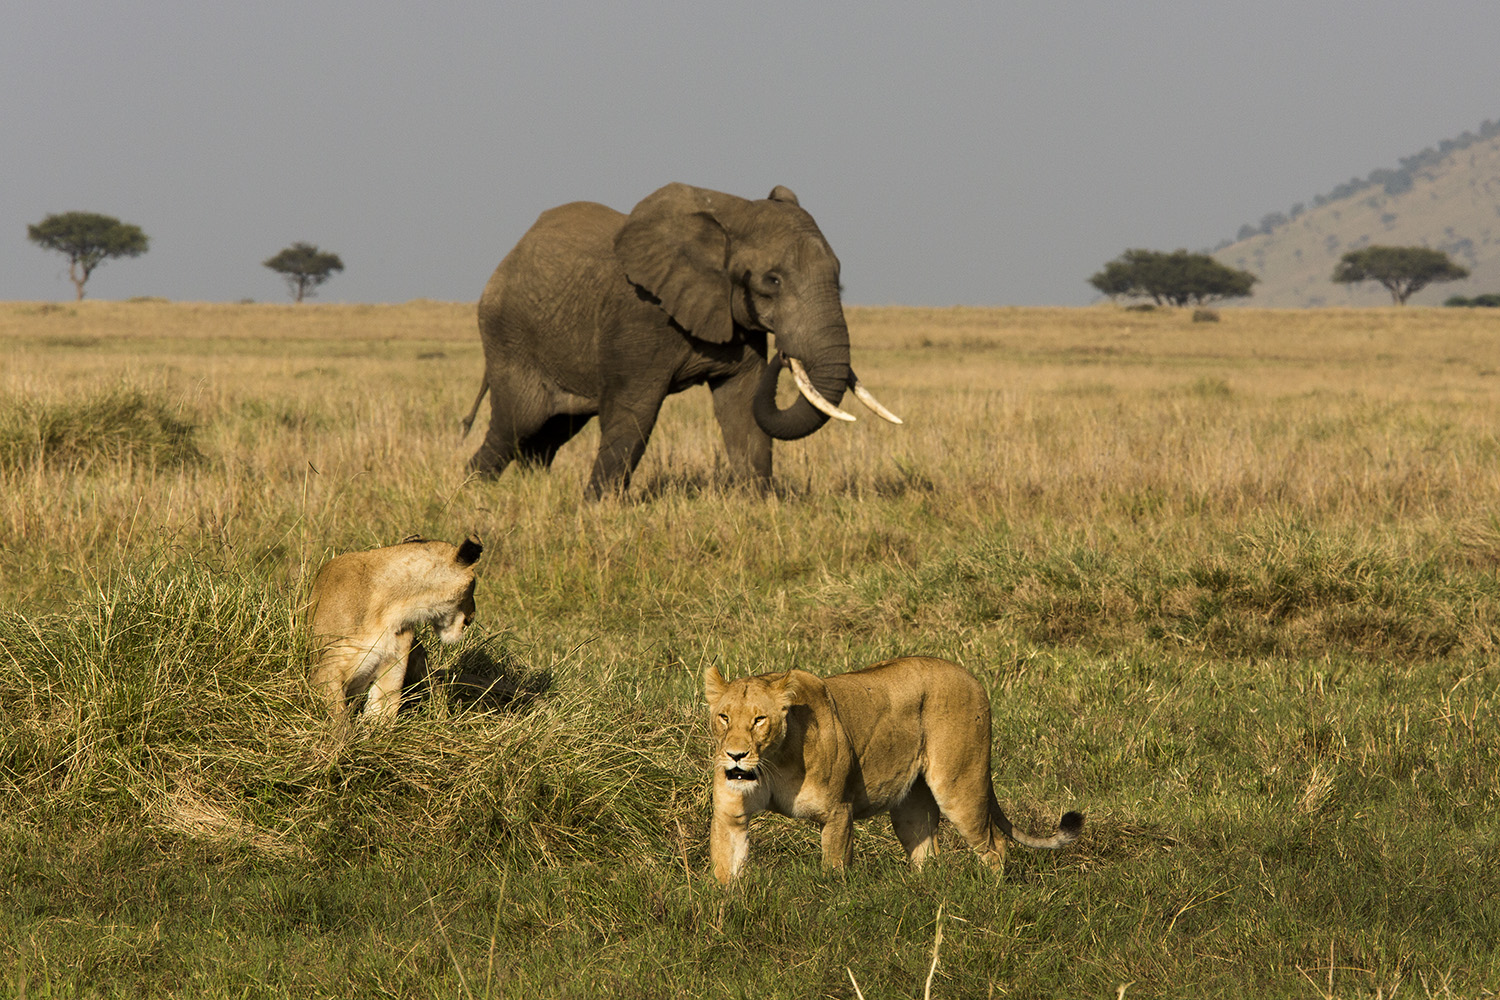 Lions and elephants in the maasai mara